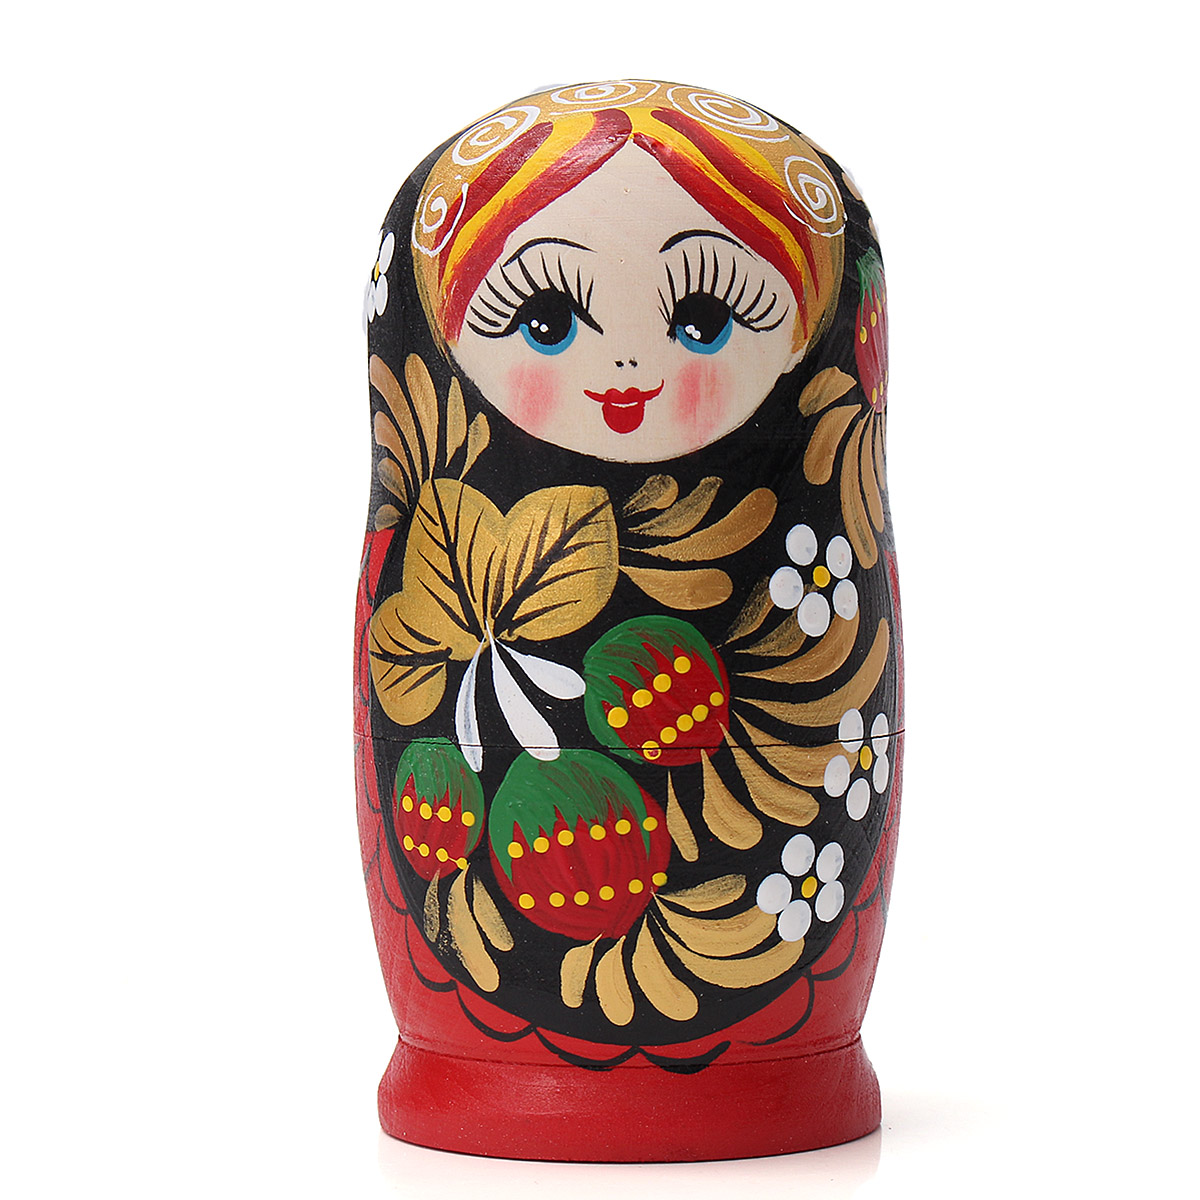 5PCSSet-Wooden-Doll-Matryoshka-Nesting-Russian-Babushka-Toy-Gift-Decor-Collection-1182666-7